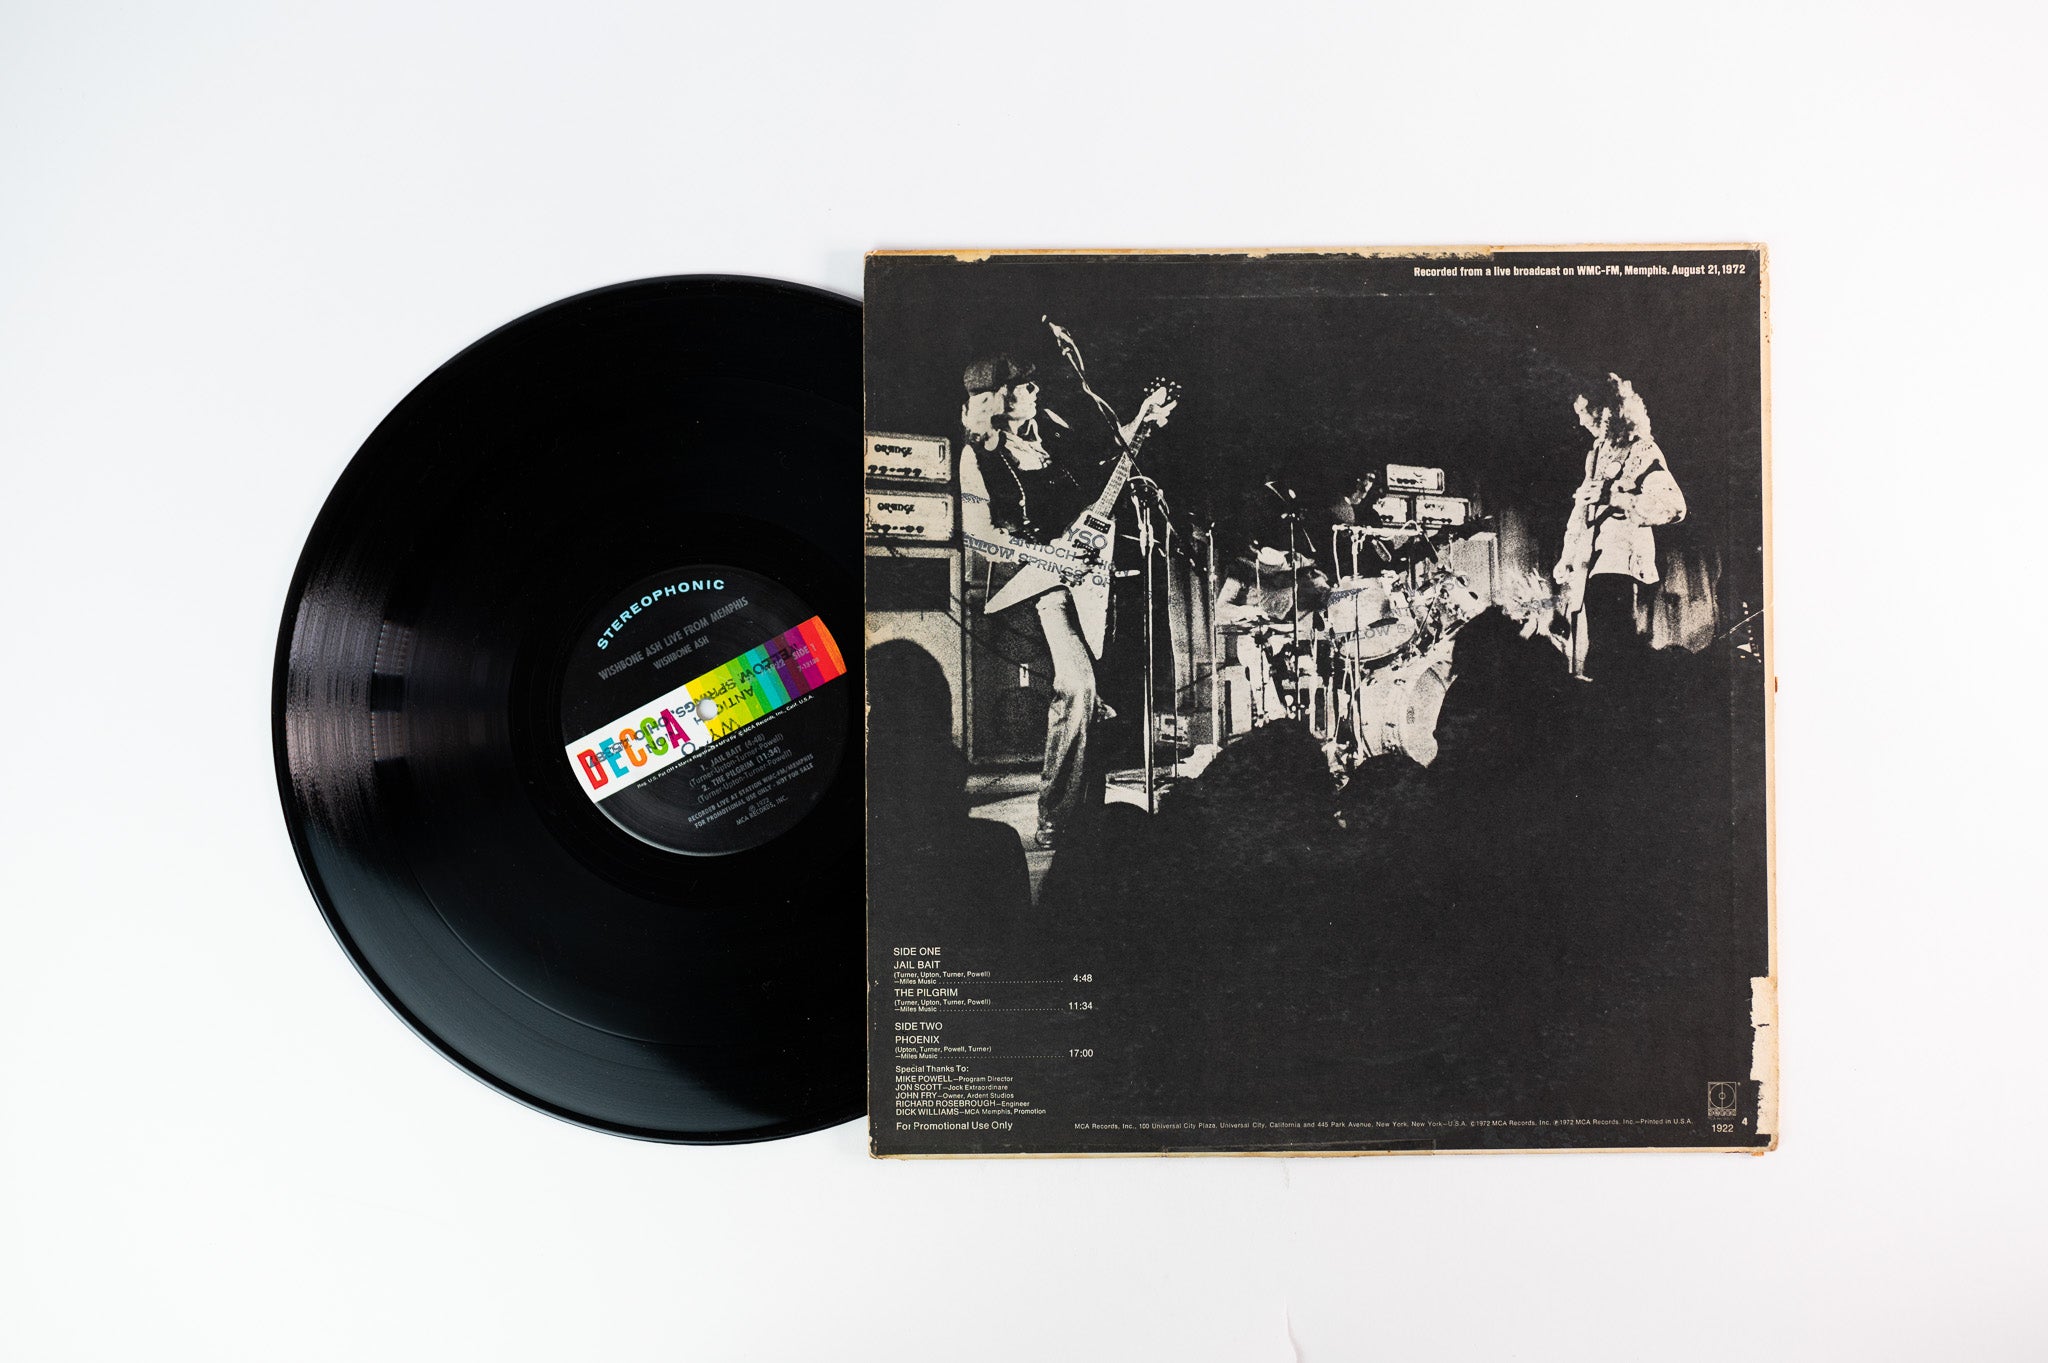 Wishbone Ash - Wishbone Ash Live From Memphis on Decca Promo